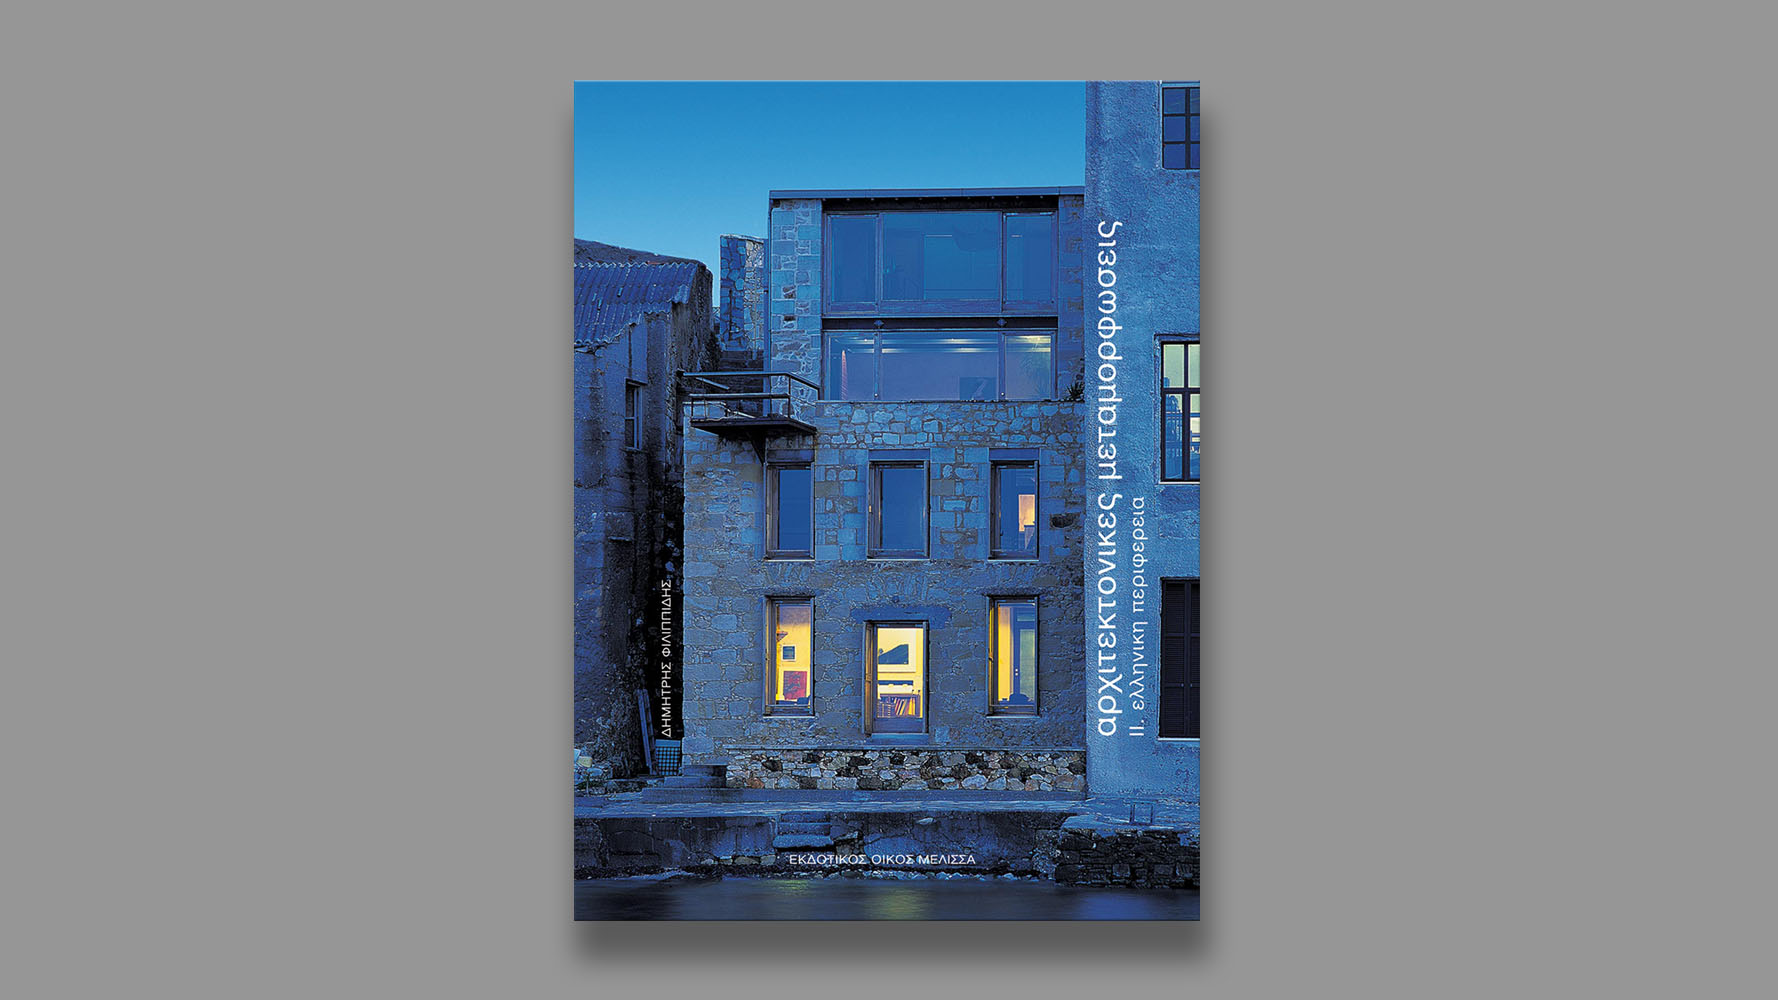 Architectural Transformations vol II, Melissa books, 2006